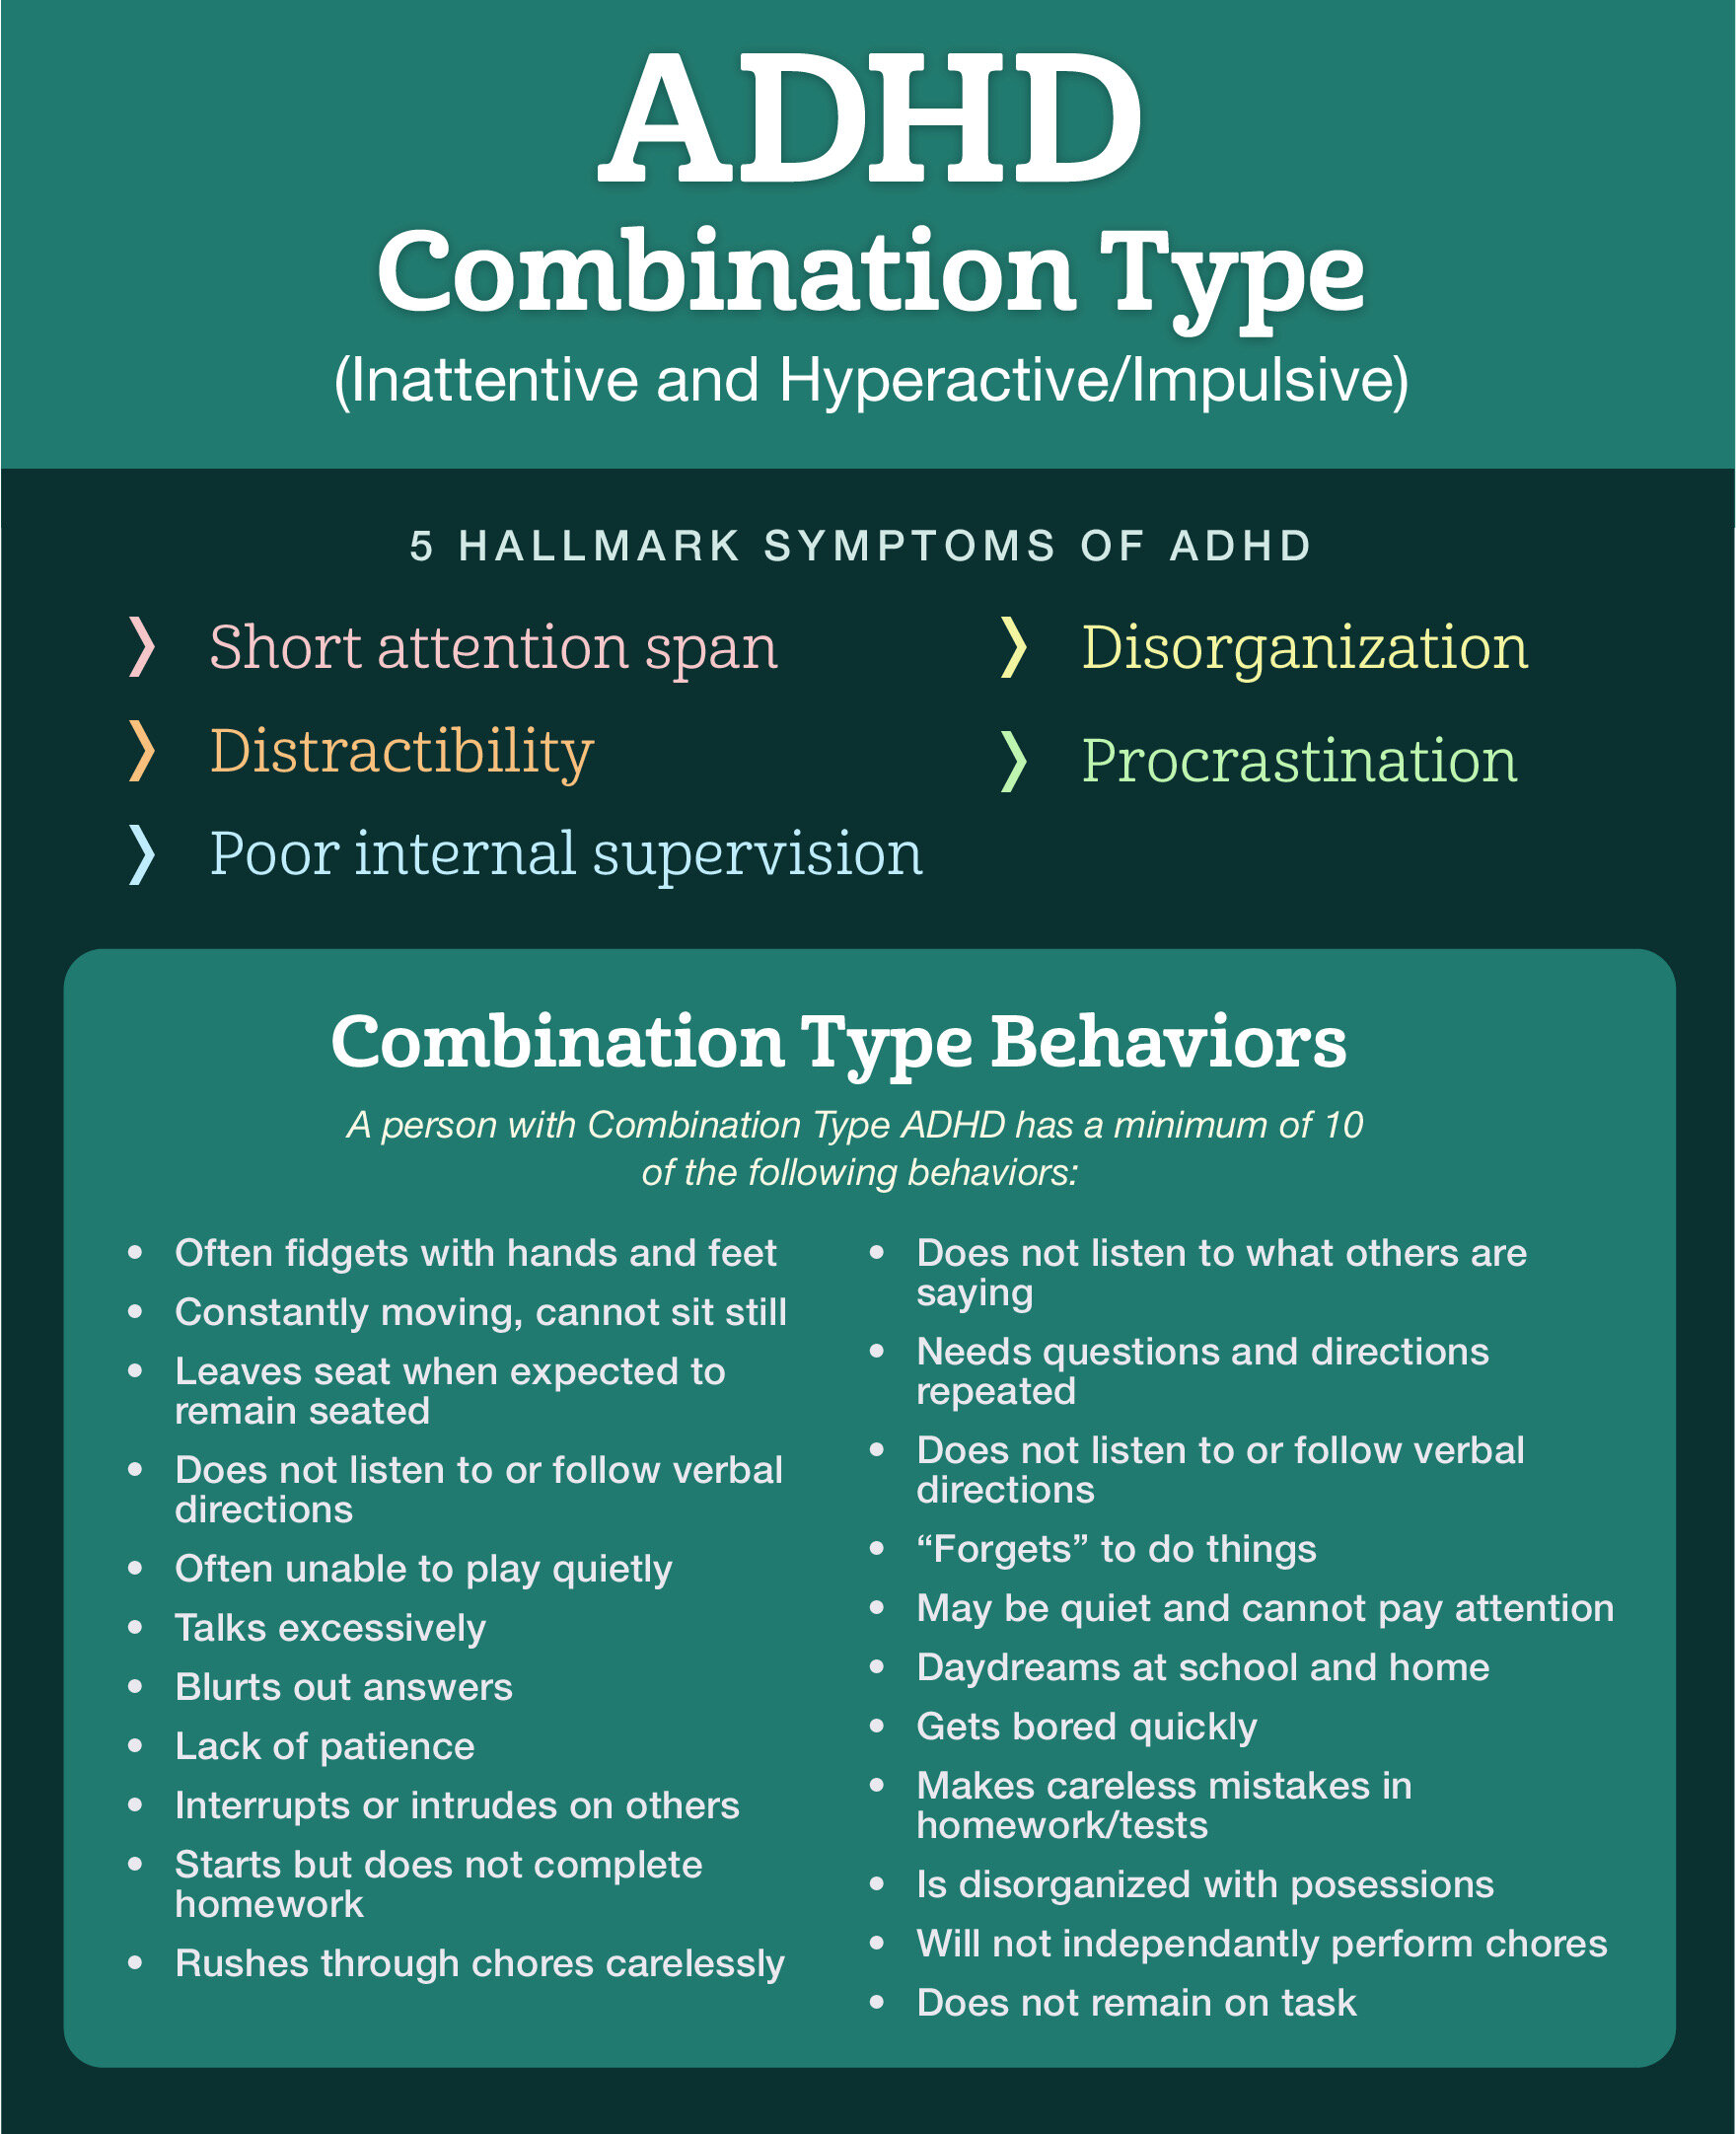 adhd-combination-type-symptoms-behaviors-add.png